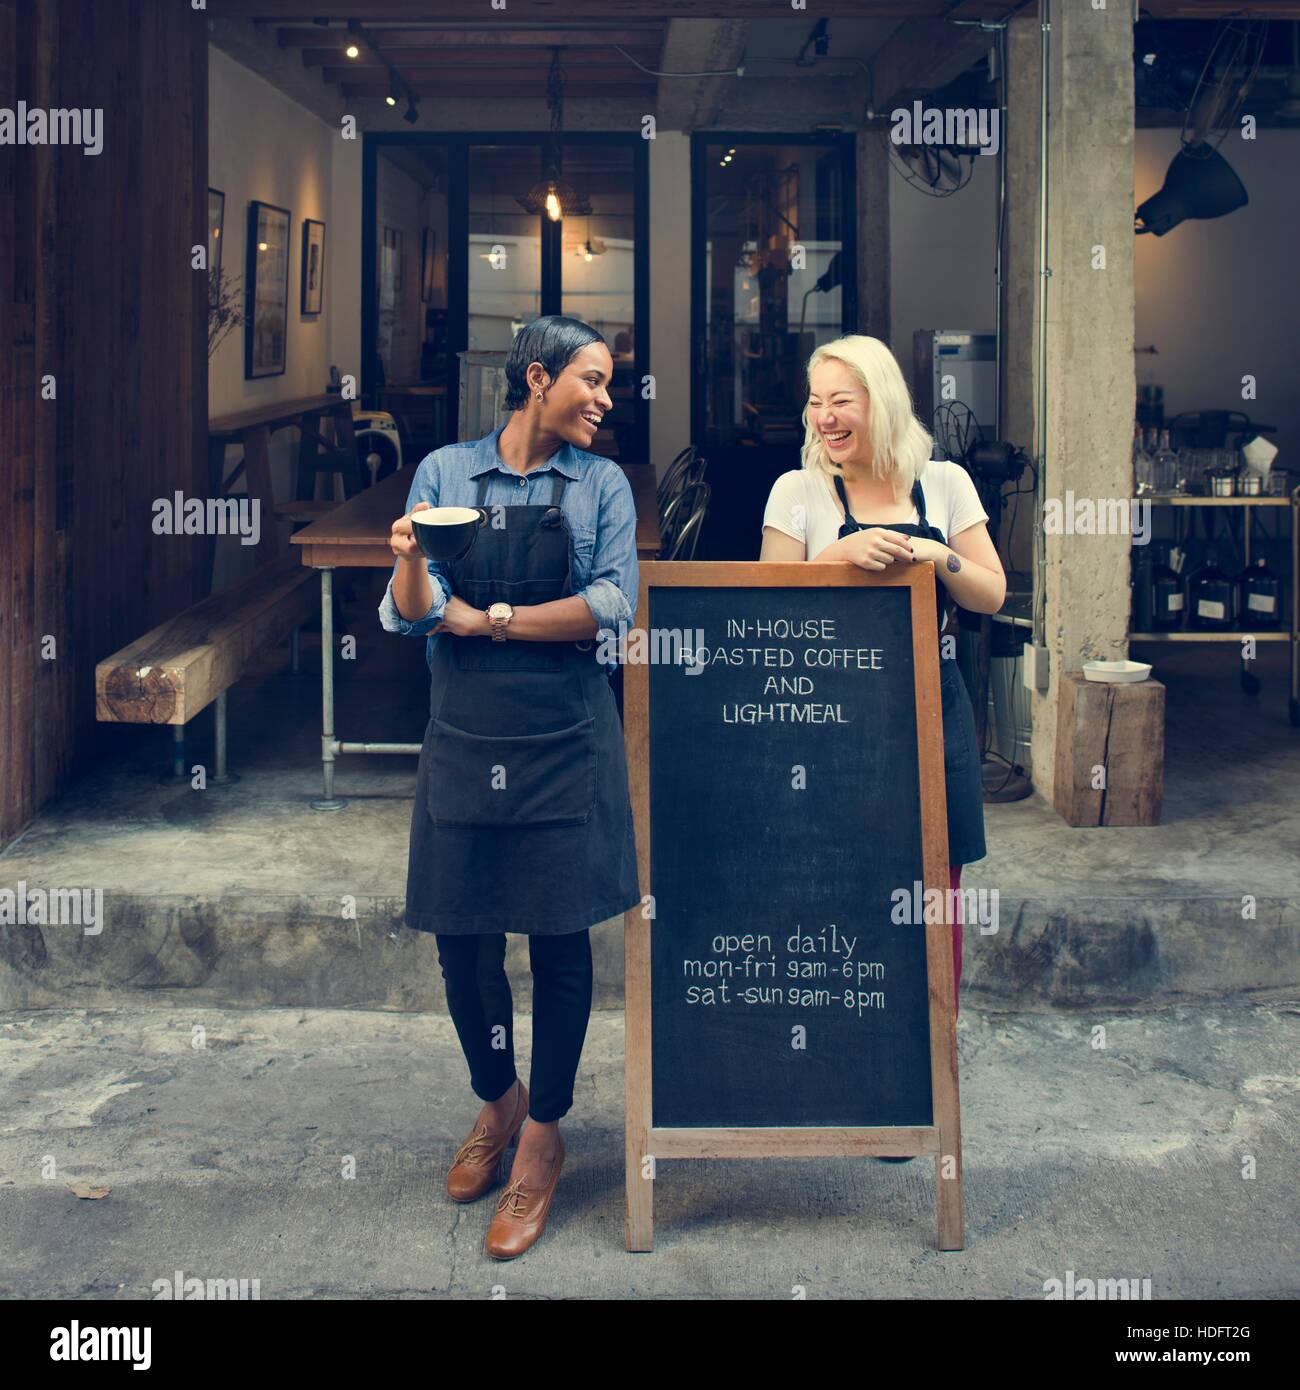 Barista Uniform Restaurant Service Apron Coffee Concept Stock Photo - Alamy